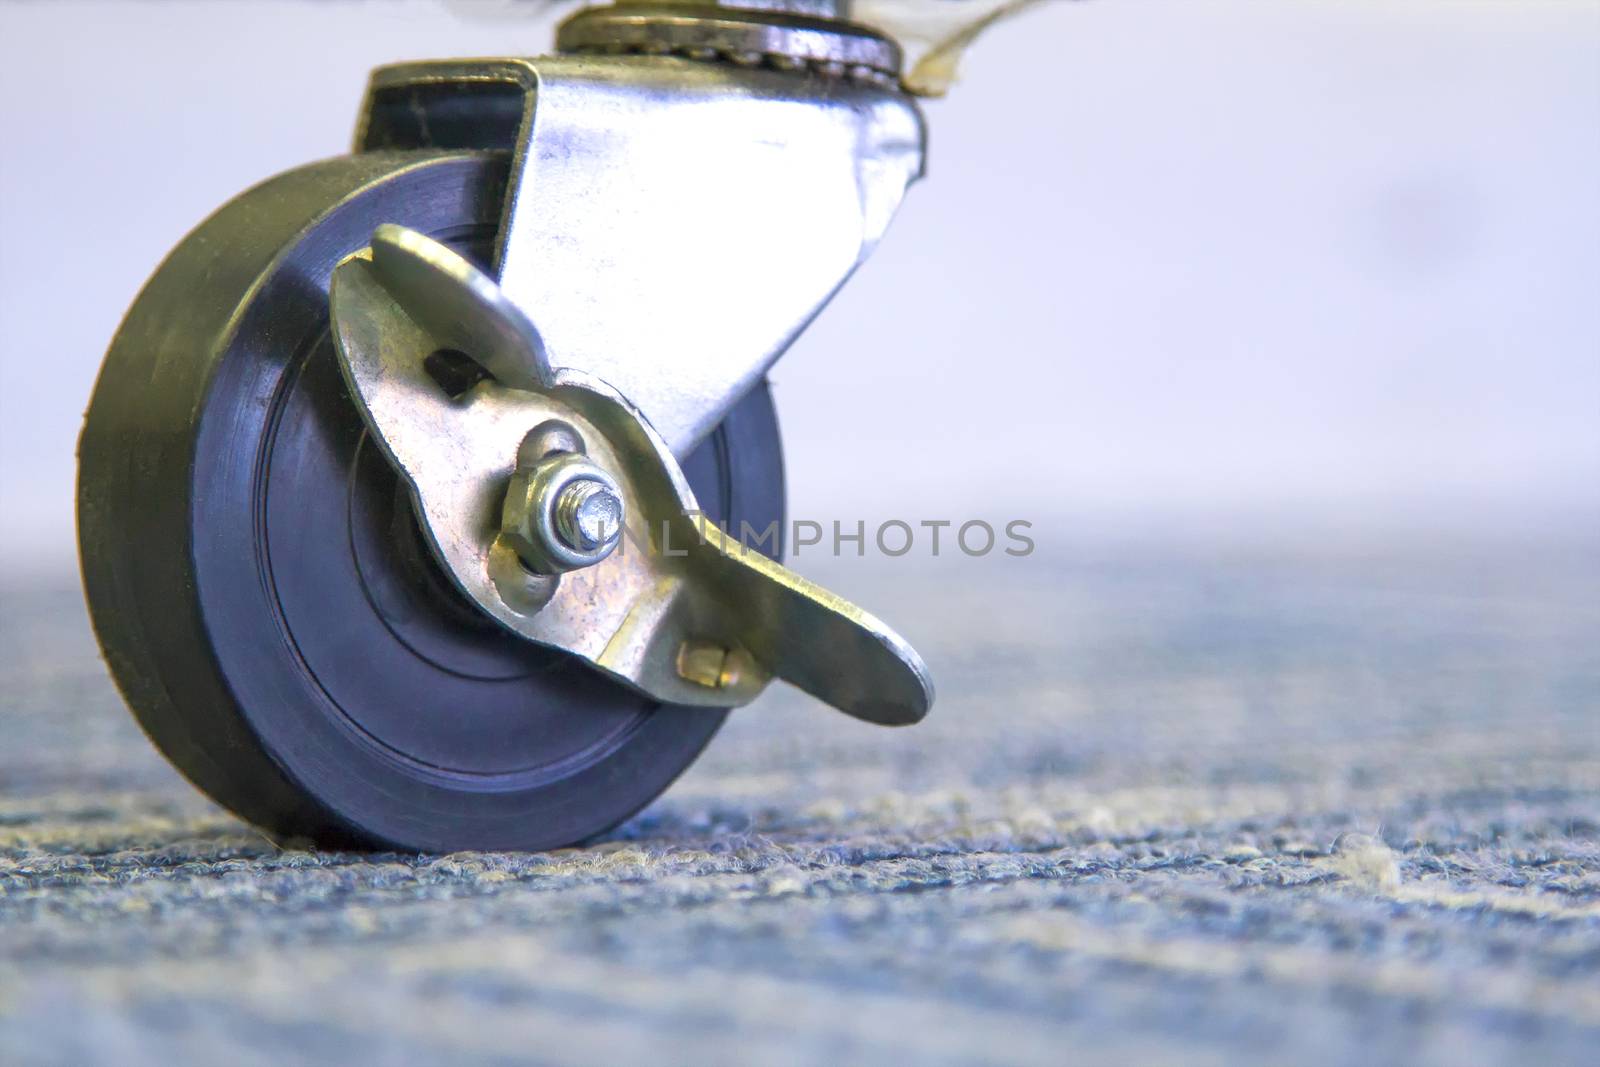 Small black rubber wheels on the carpet. by TakerWalker